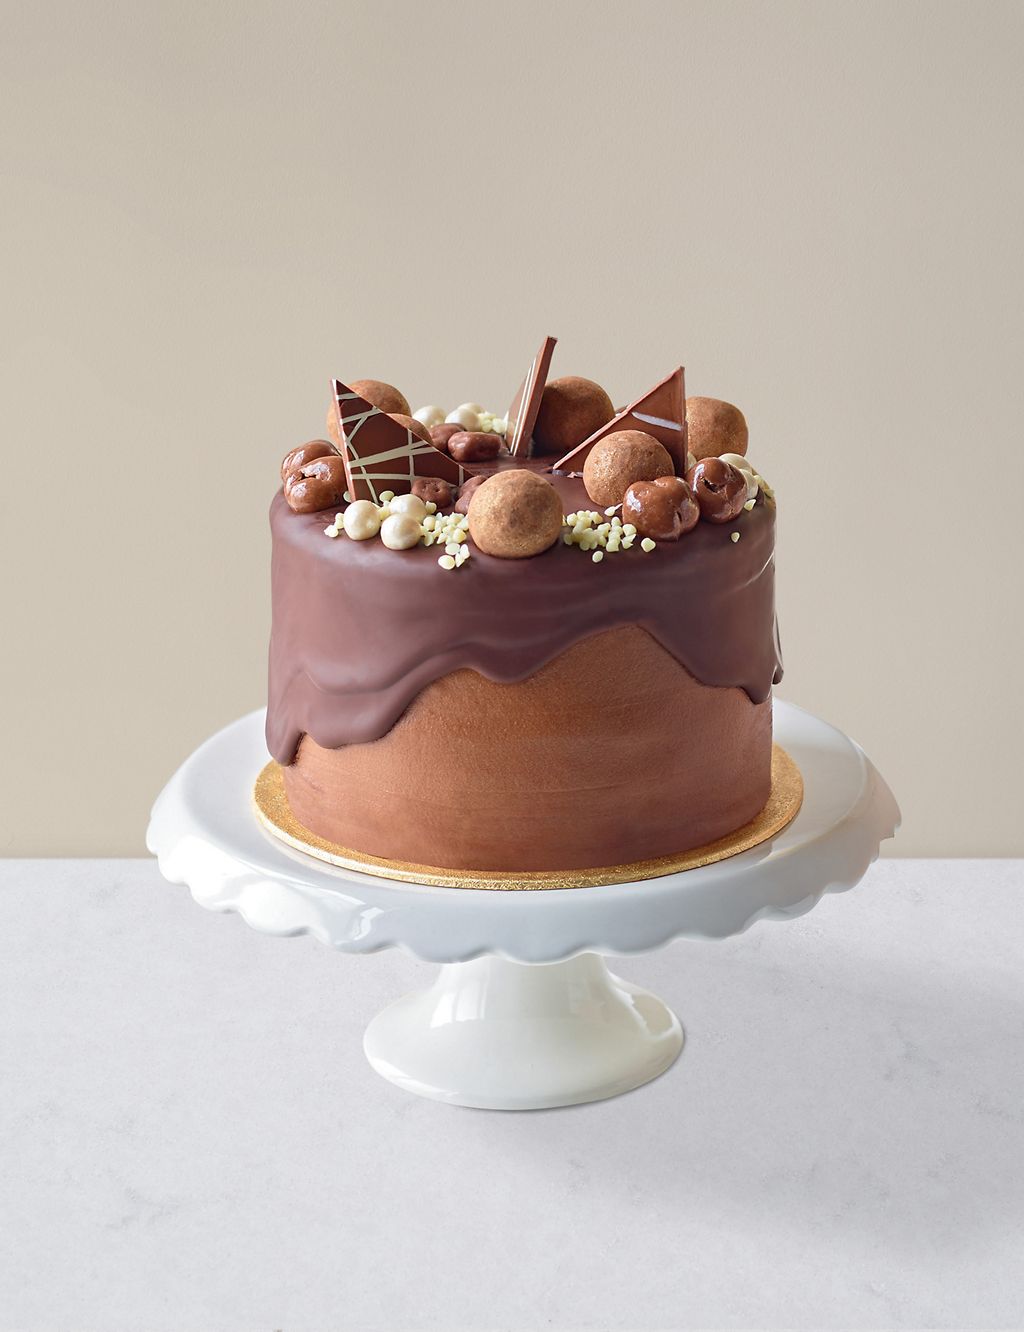 Chocolate & Caramel Dribble Cake 3 of 4